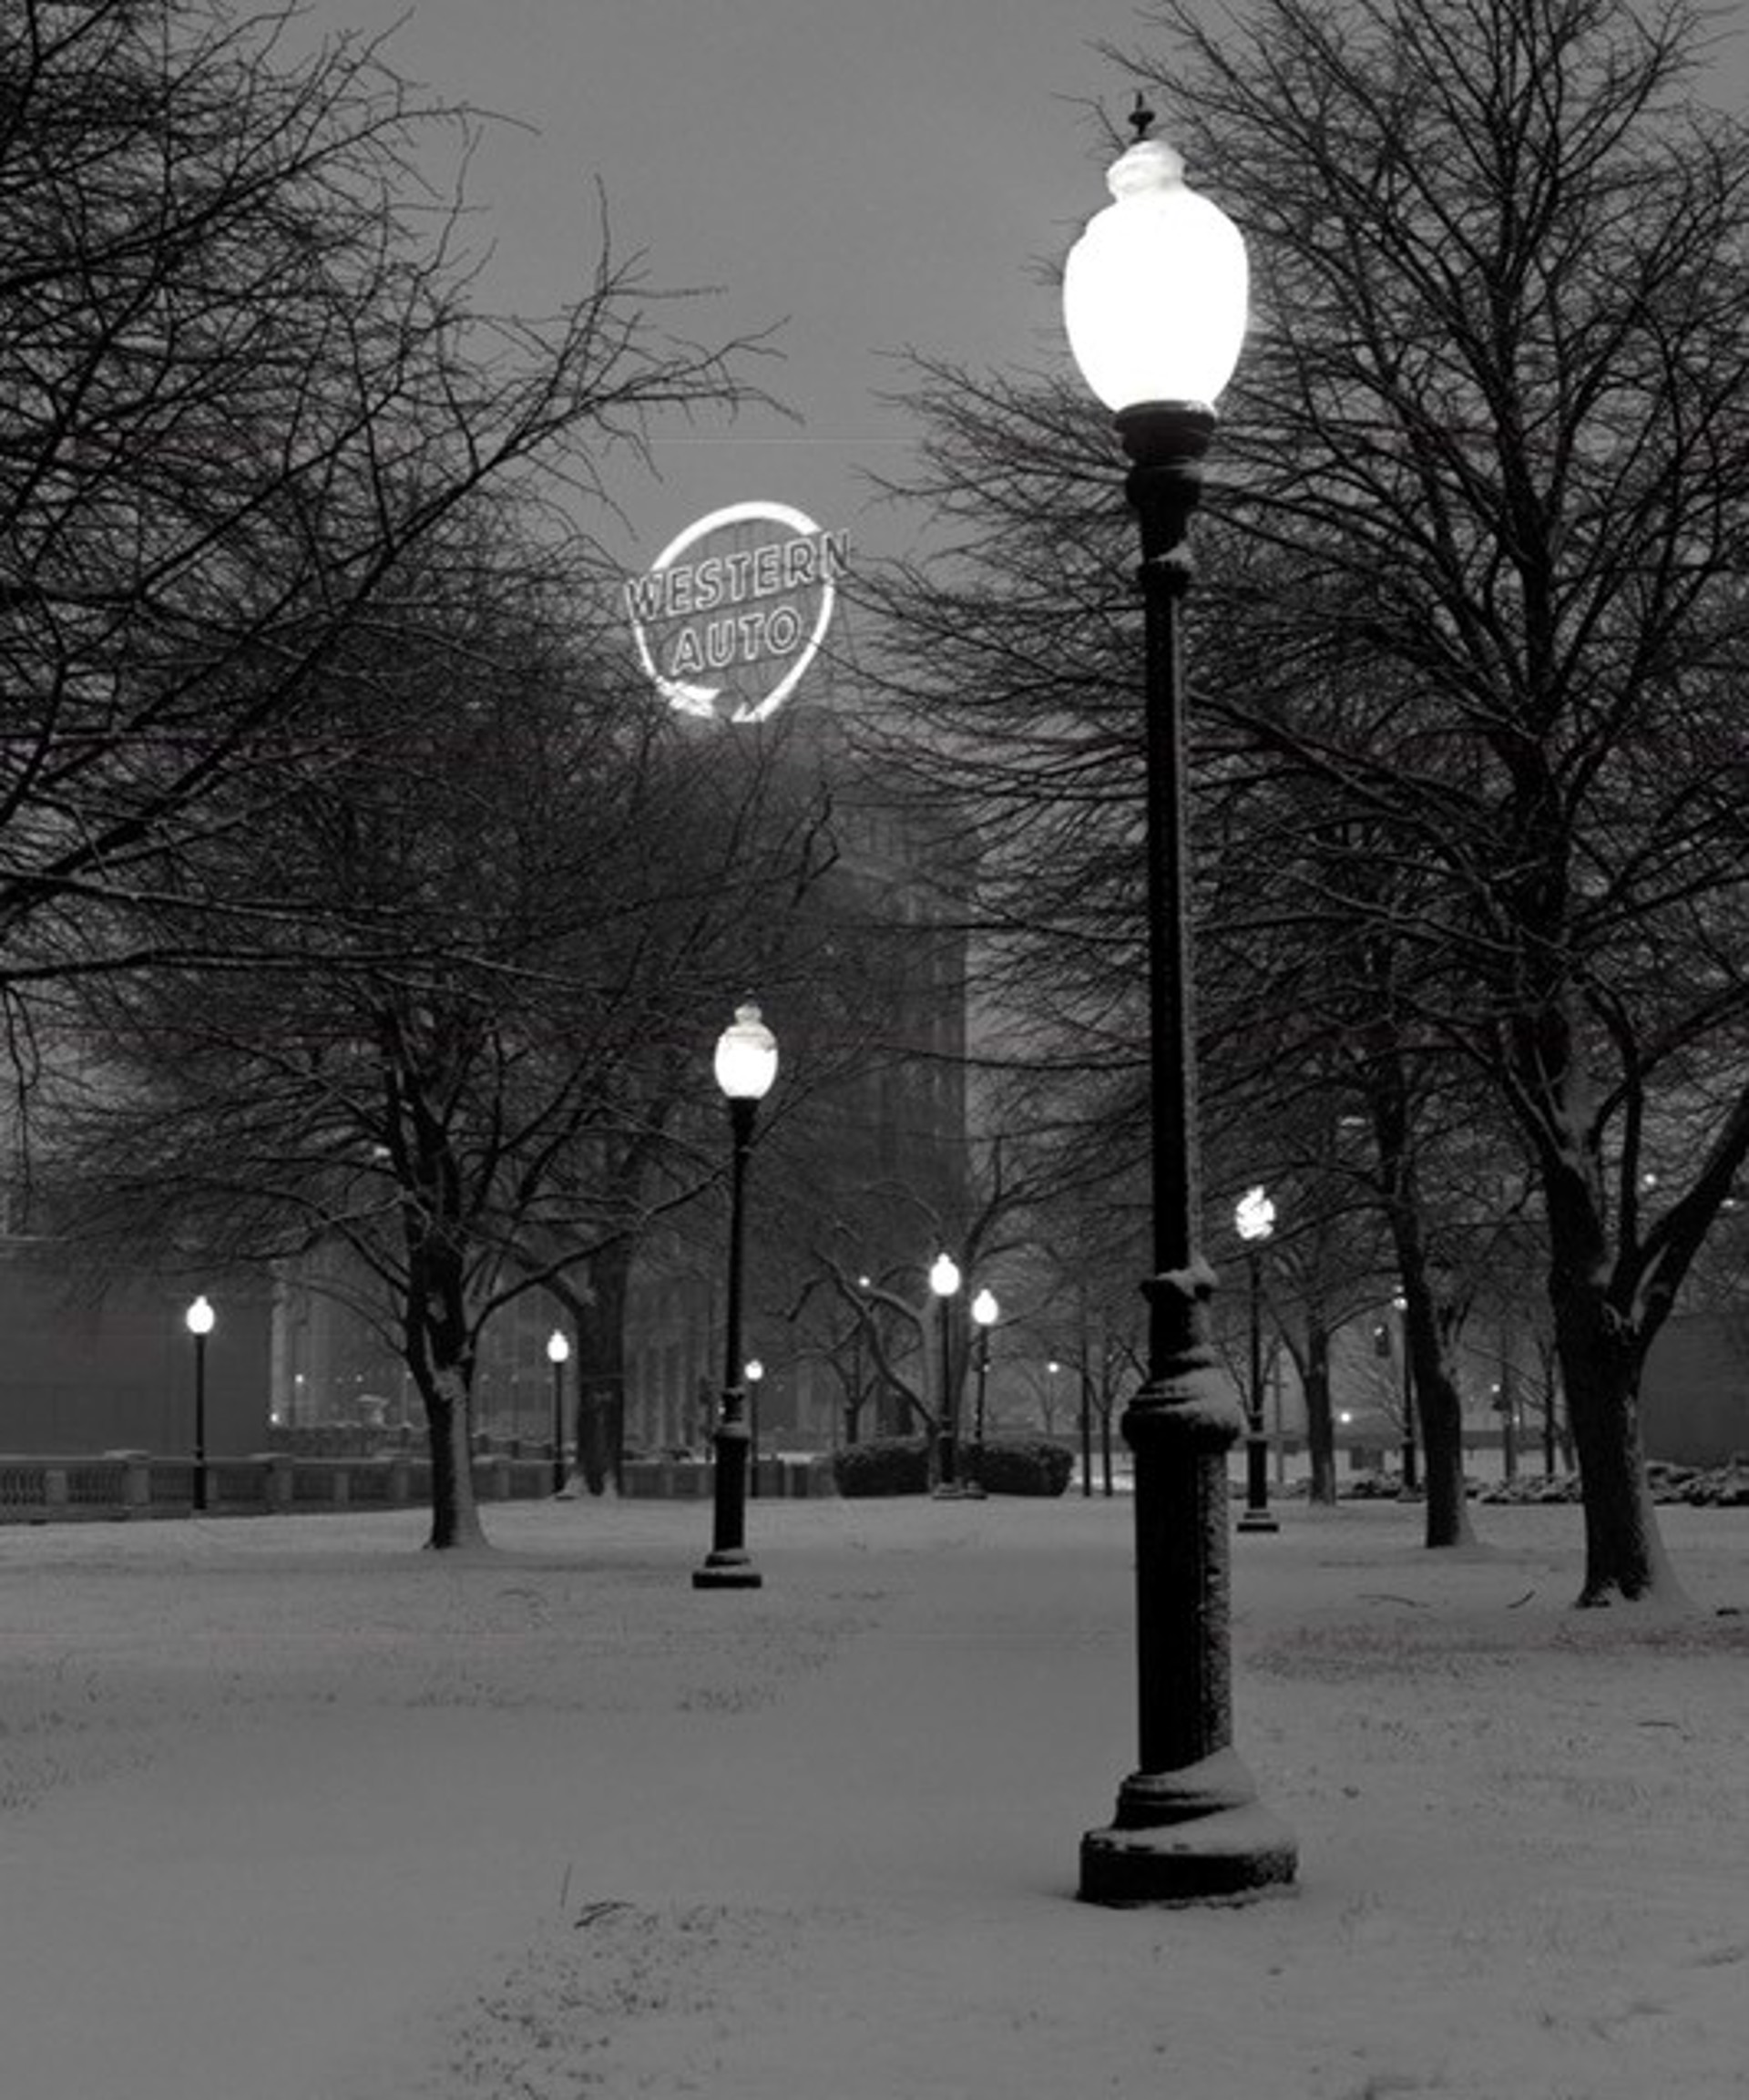 Washington Square Park by Mike McMullen